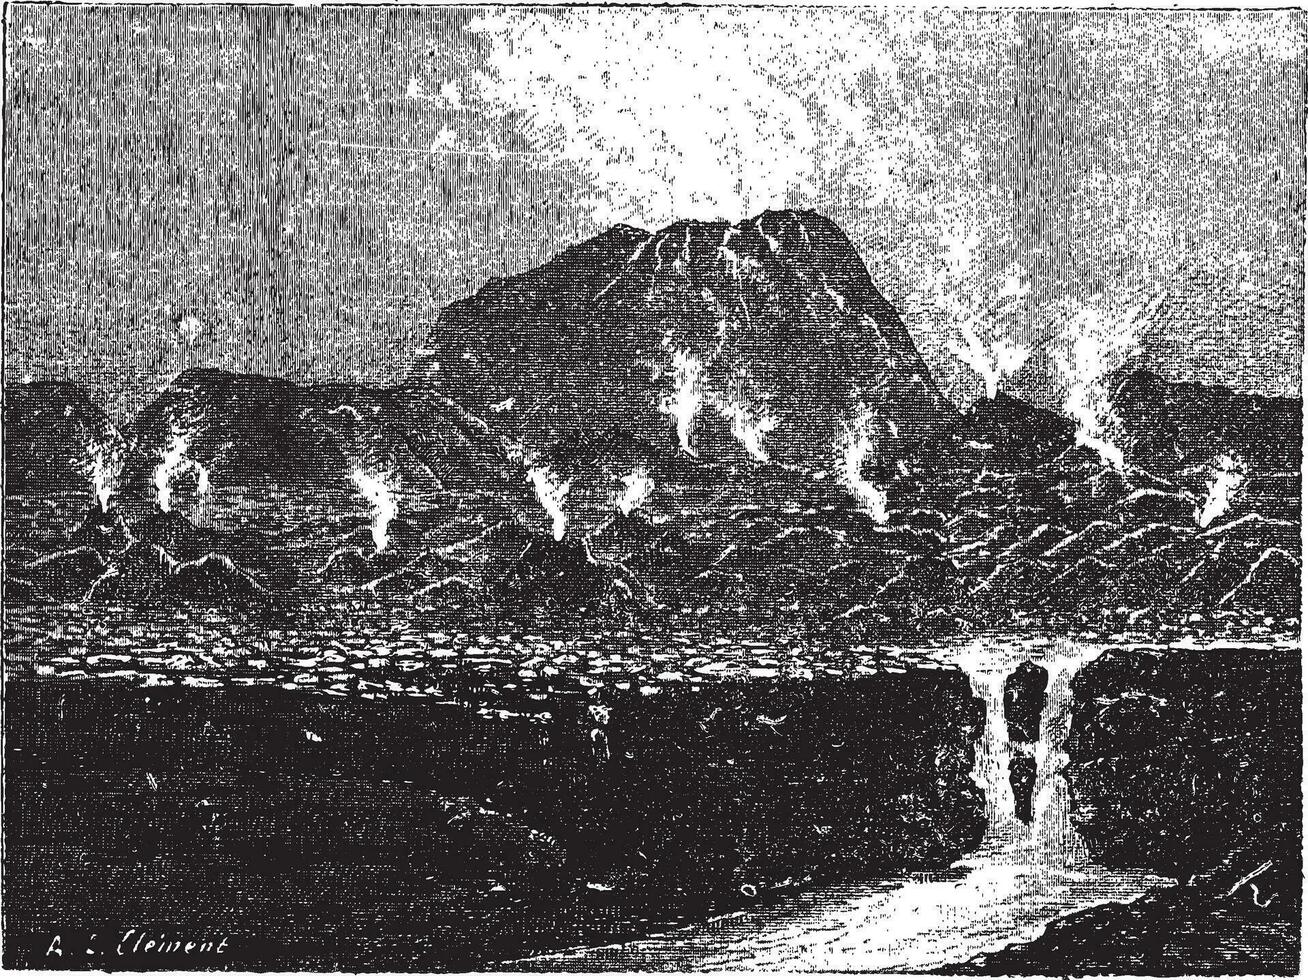 el Jorullo, ein Asche Kegel Vulkan, Jahrgang Gravur. vektor